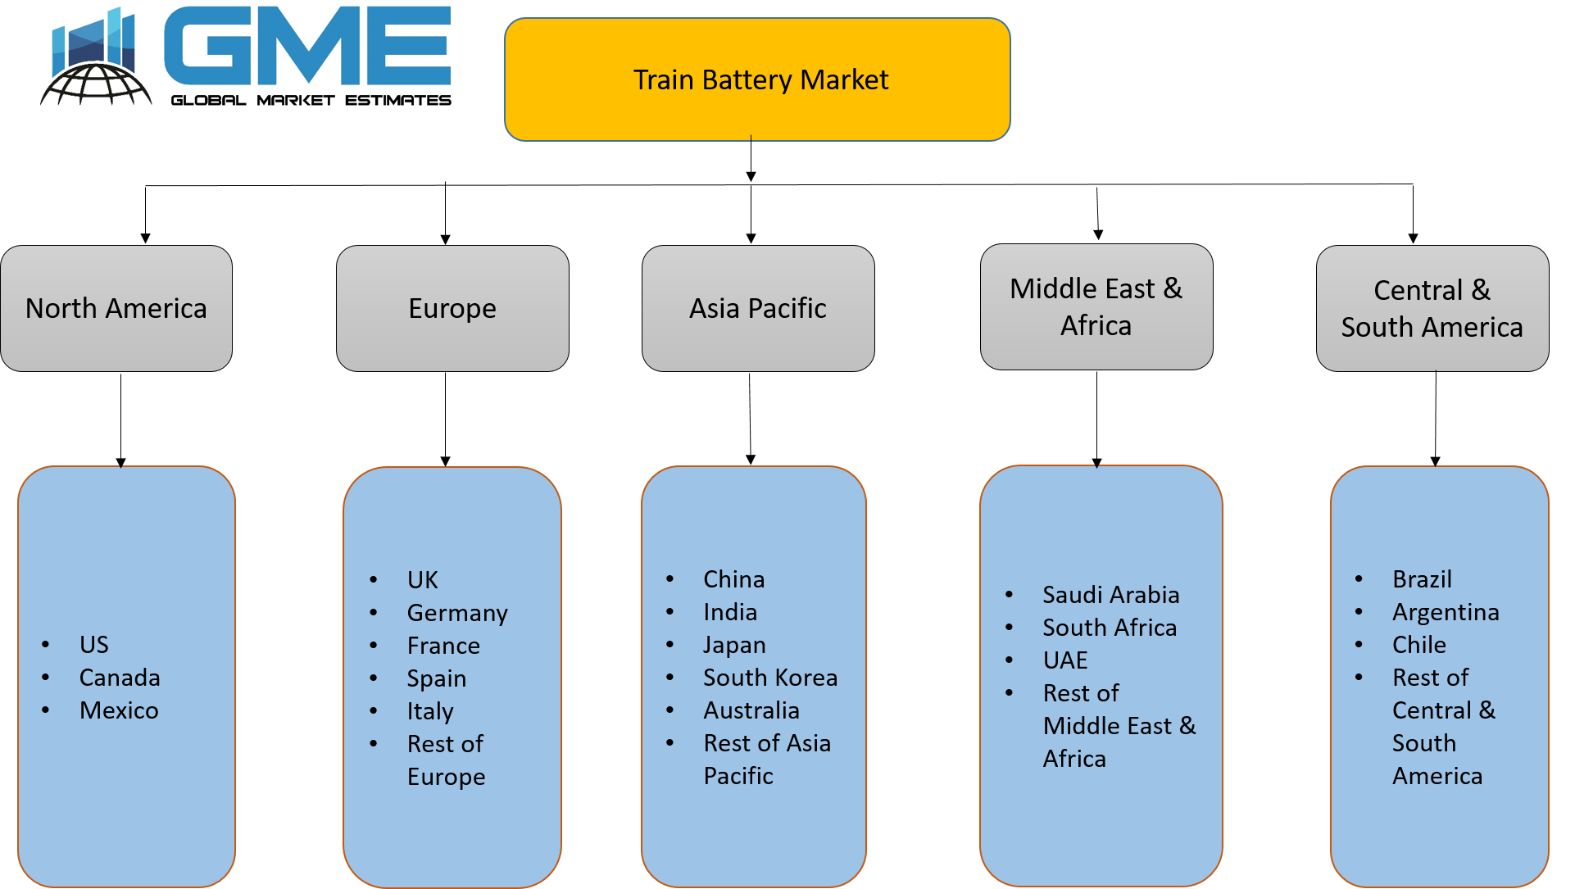 Train Battery Market - Regional Analysis